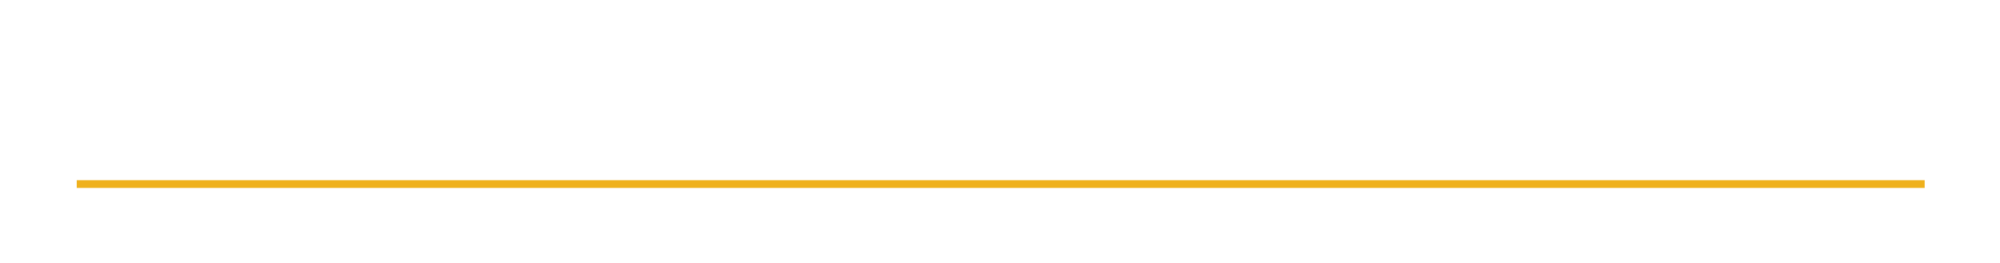 University logo with one line full name of the university on dark background.